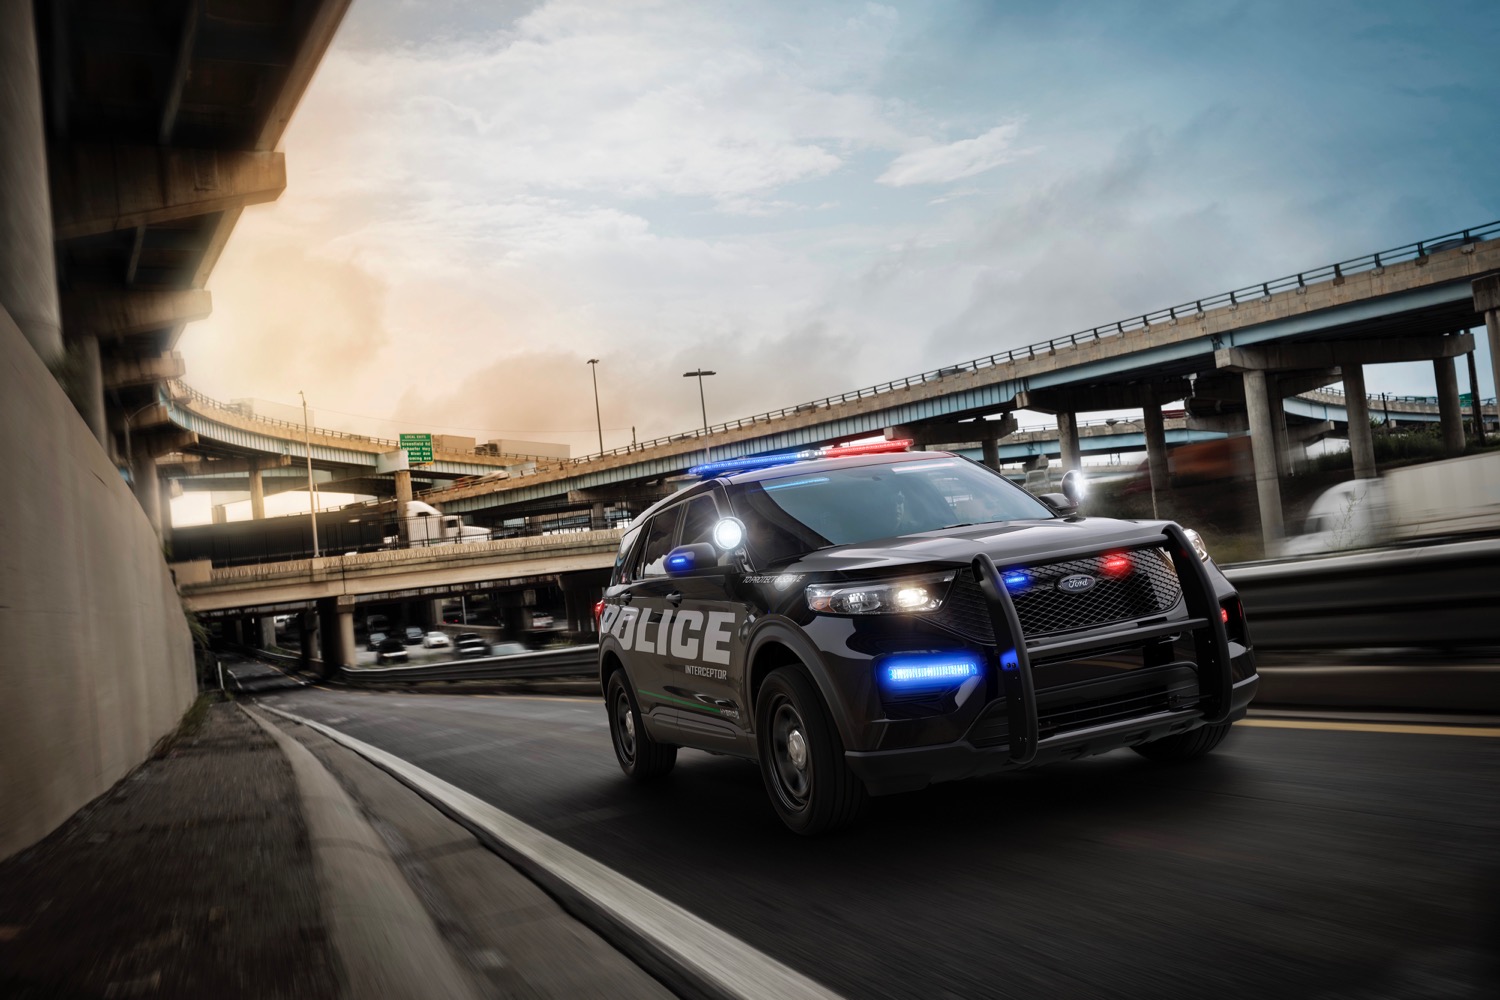 2020 Ford Police Interceptor Utility